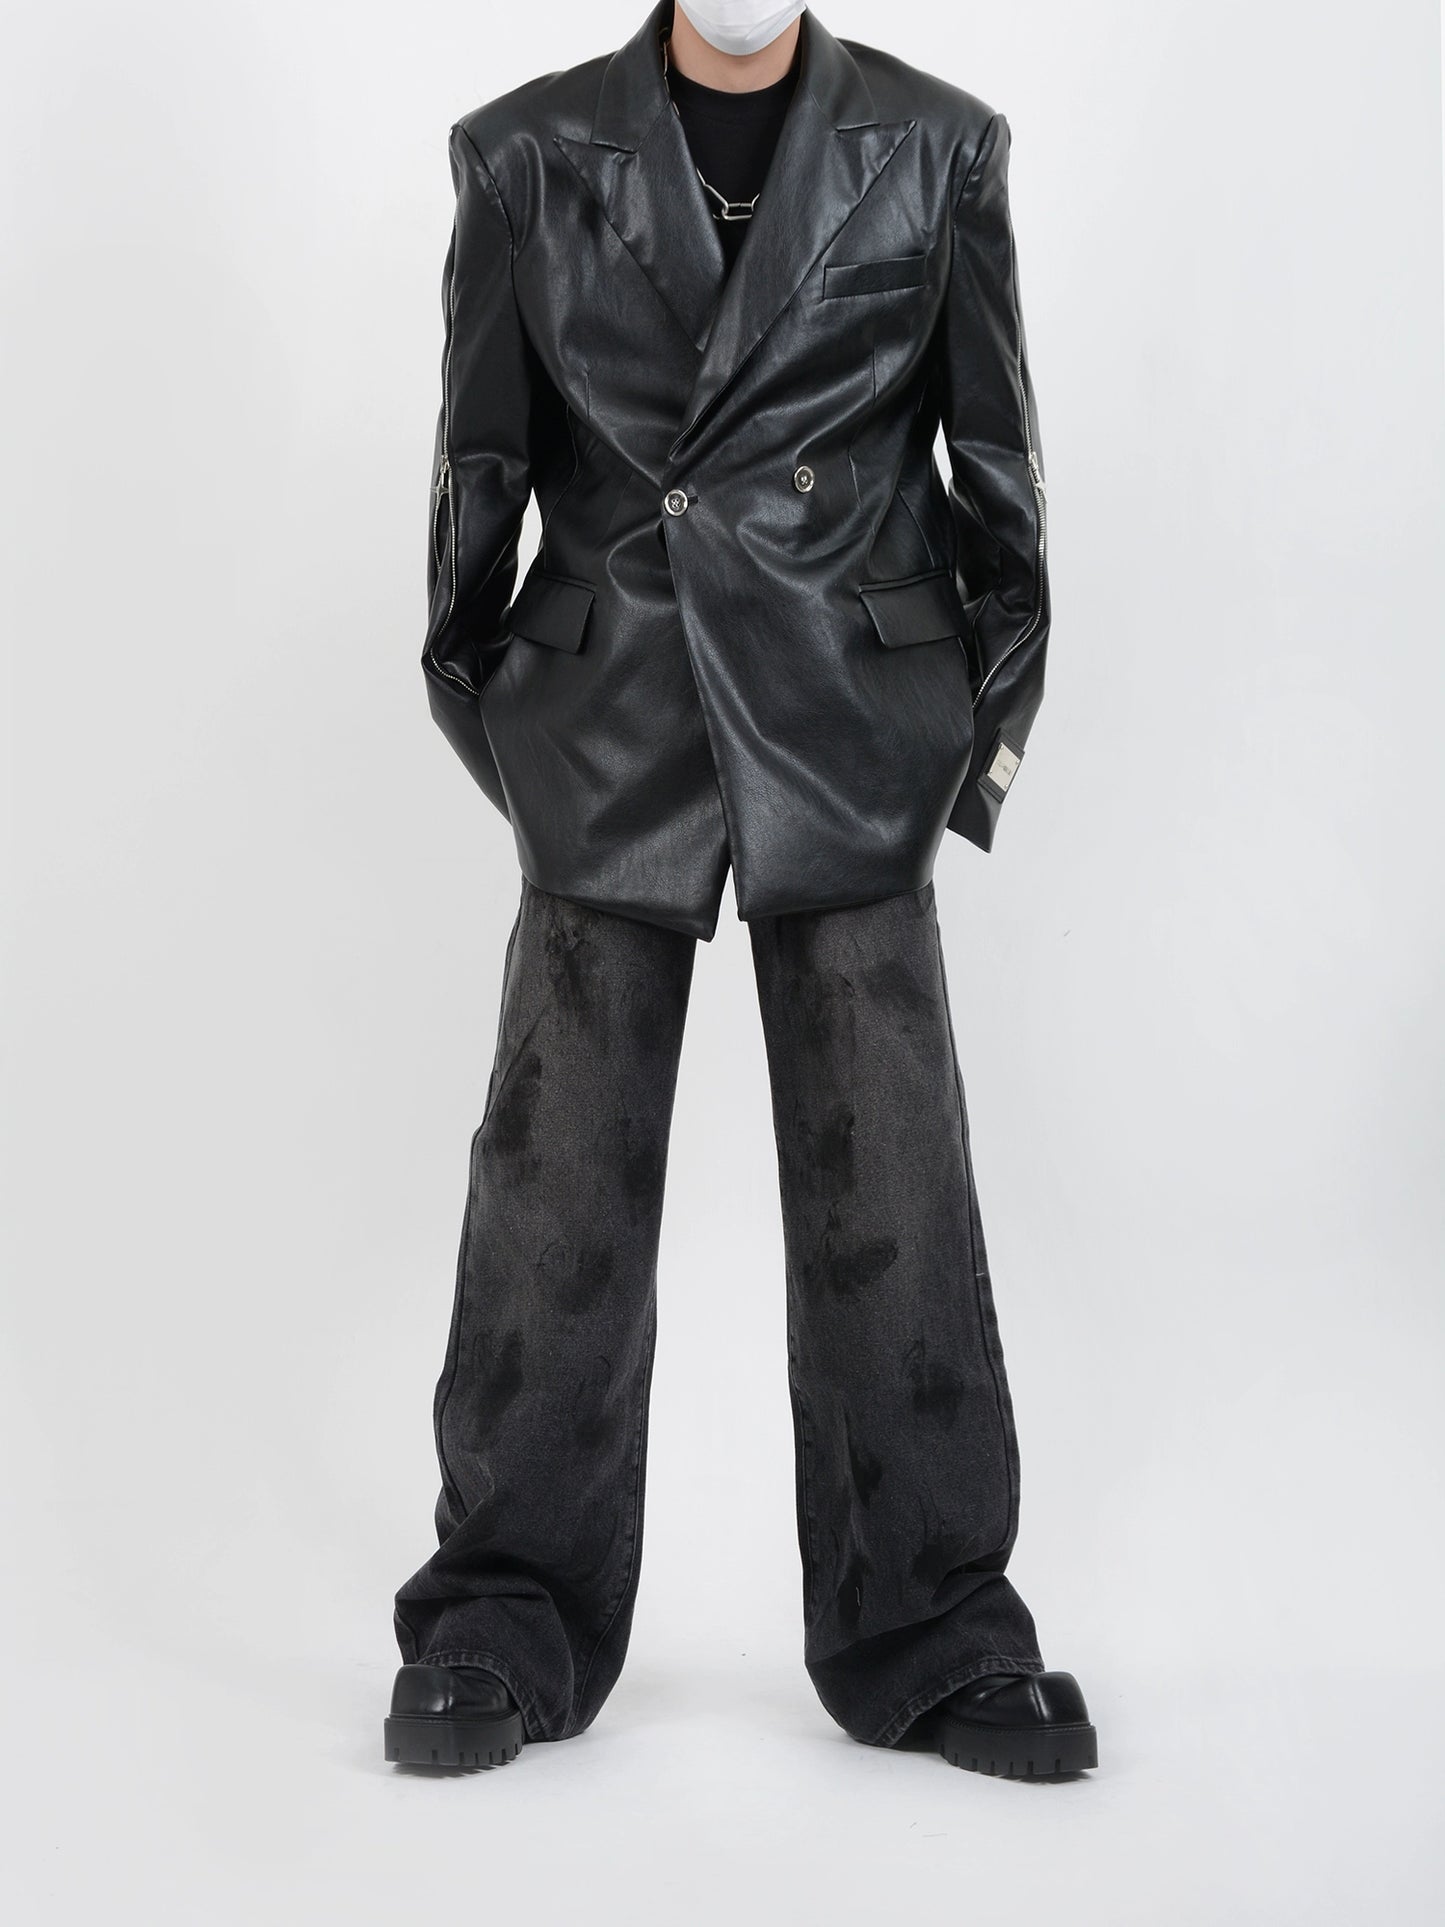 LUCE GARMENT Niche Design Sense Metal Zipper Padded Shoulder Leather Blazer Blazer Men's Premium Silhouette Suit